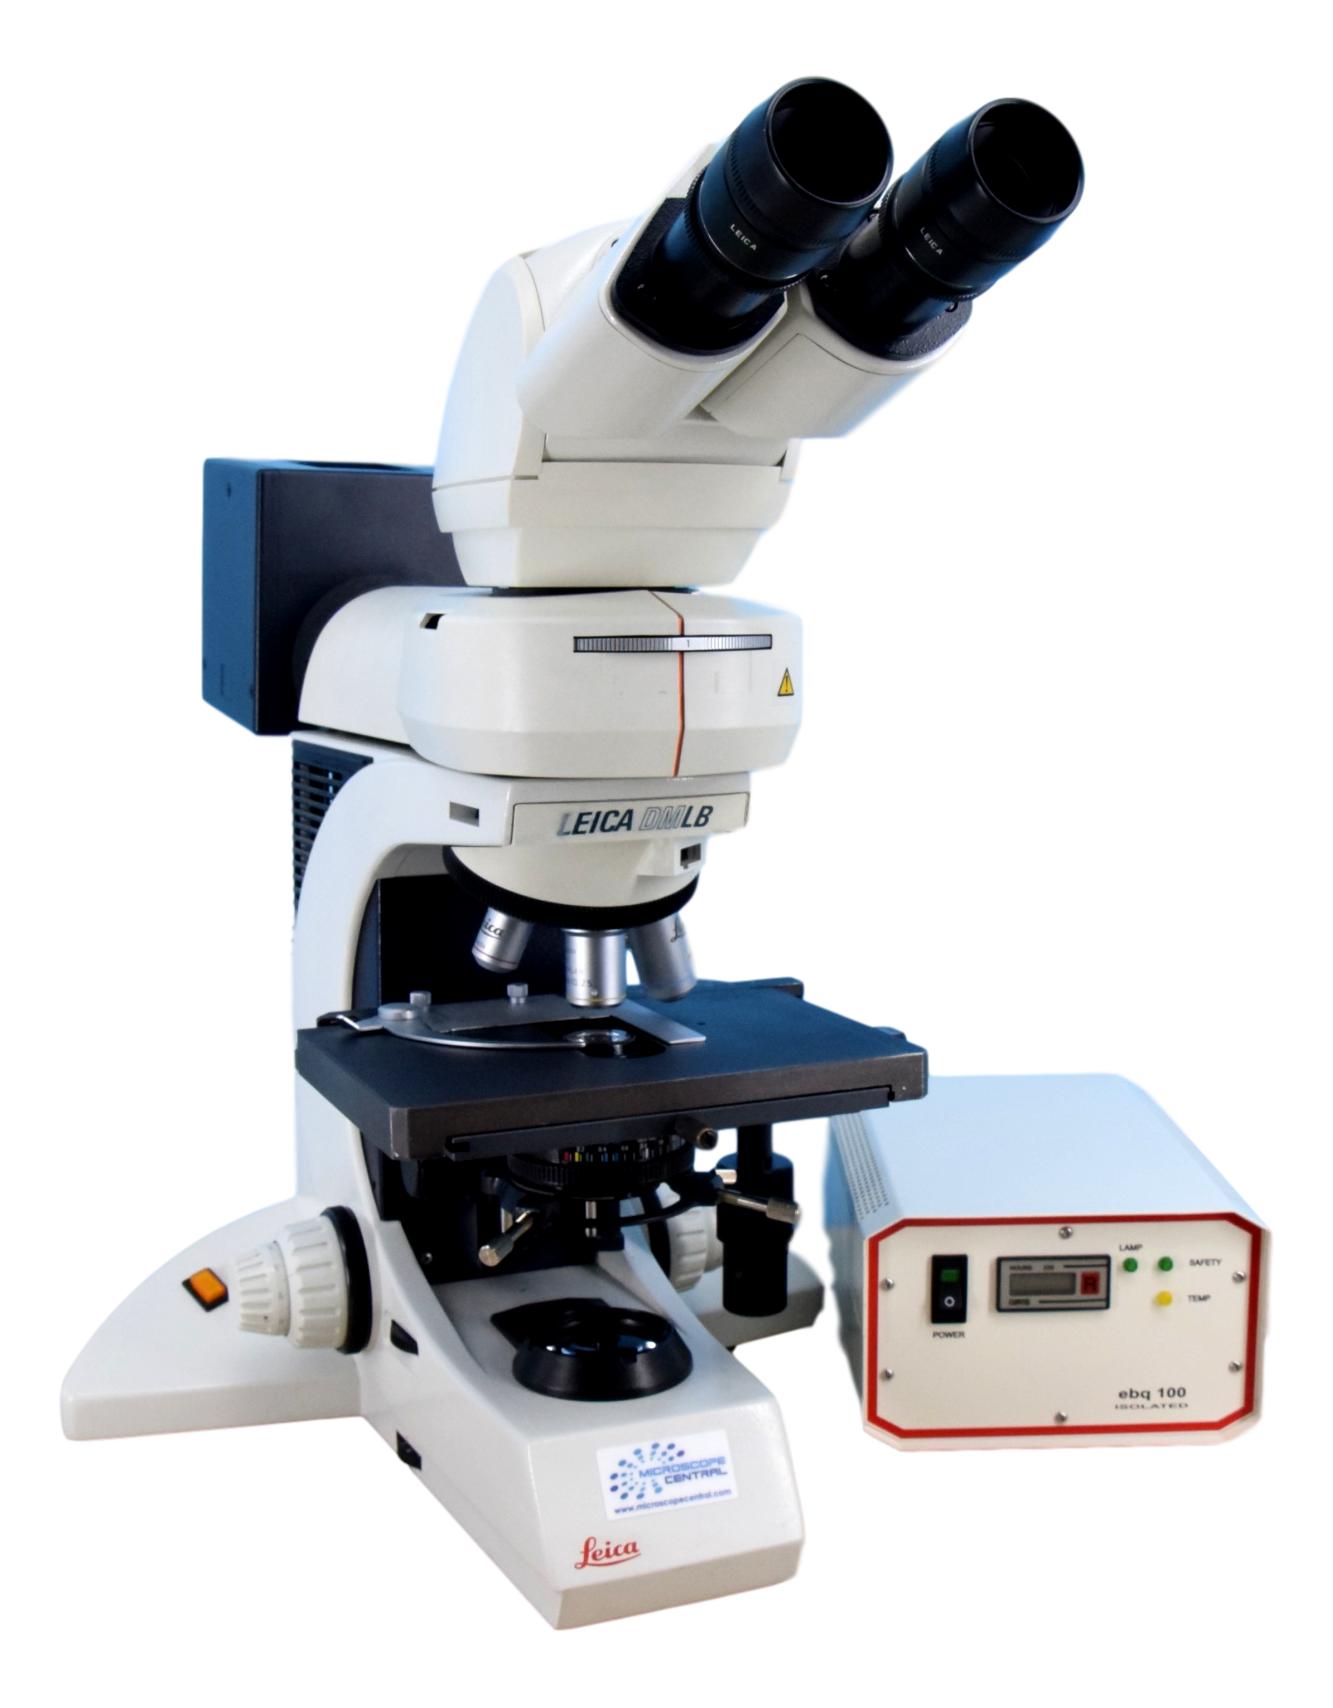 Leica DMLB Fluorescence Microscope